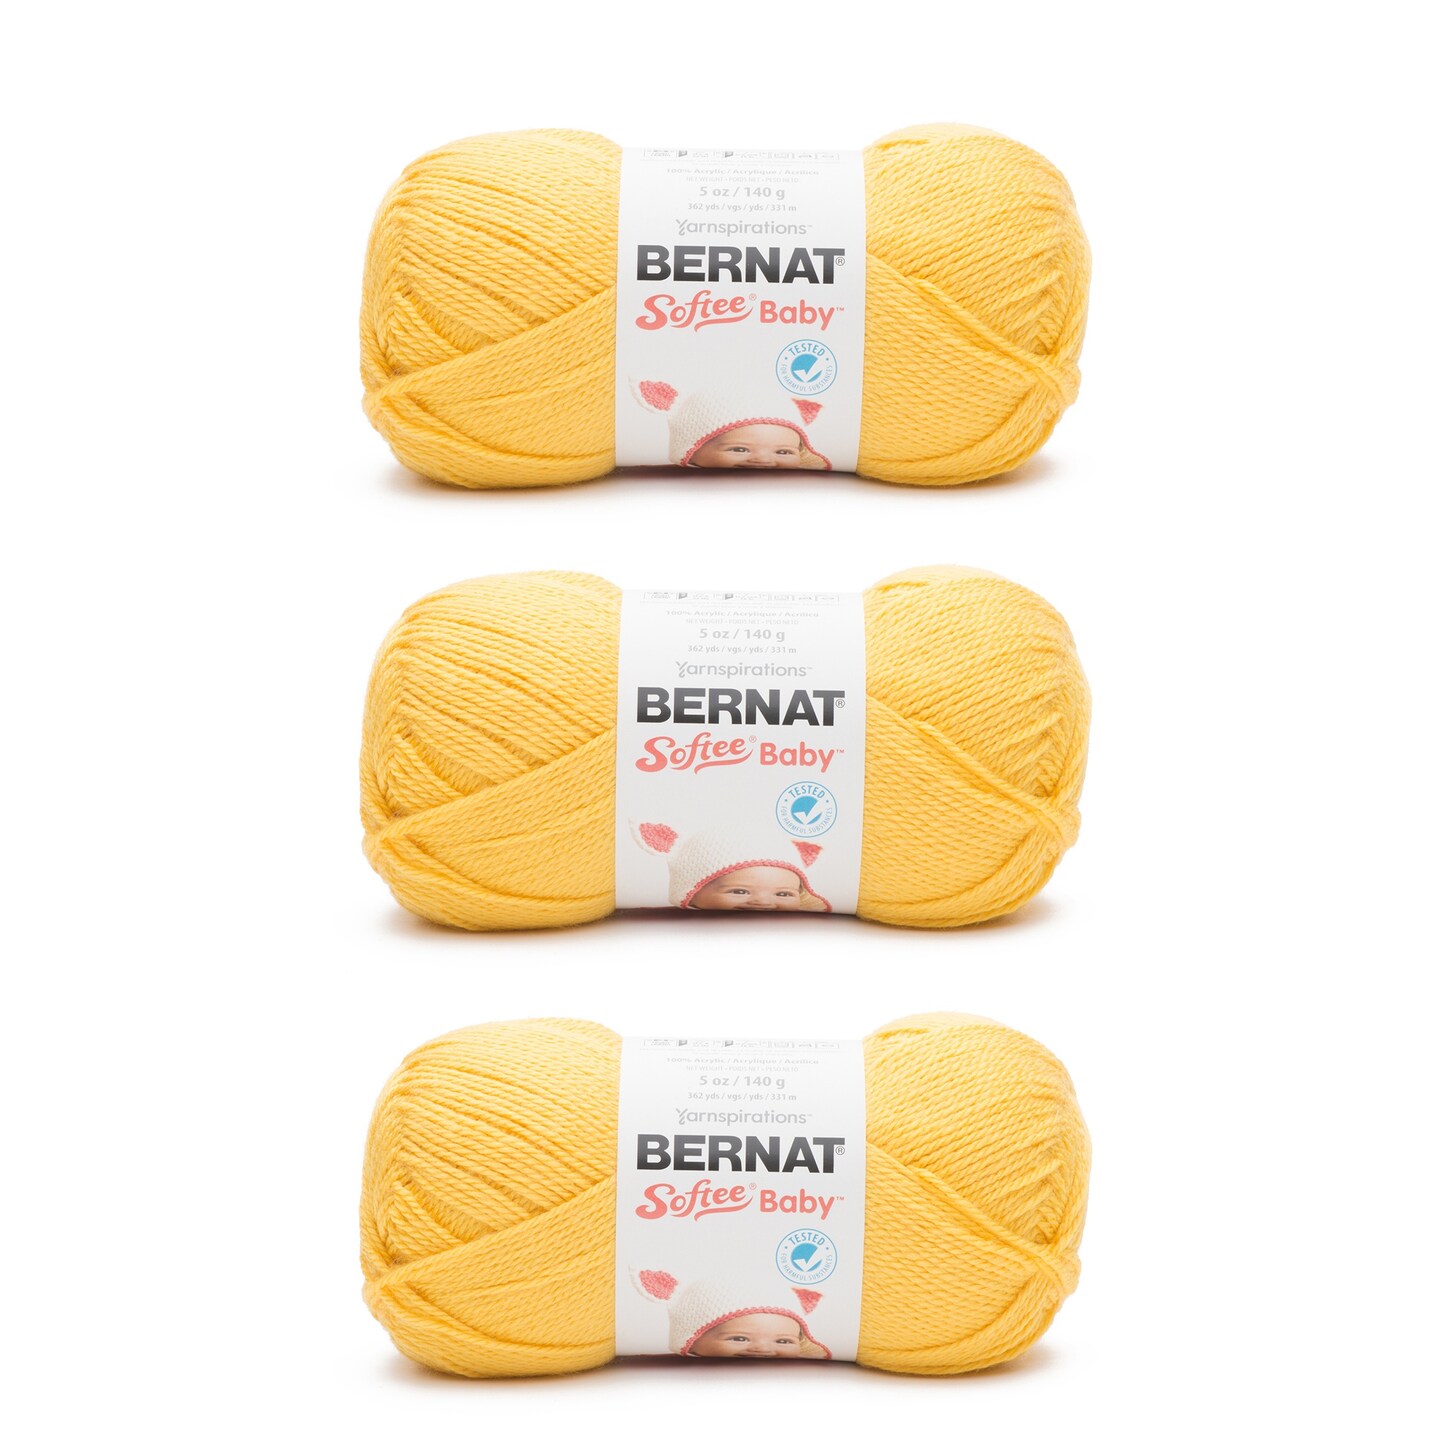 Bernat Softee Baby Buttercup Yarn 3 Pack of 141g/5oz - Acrylic - 3 DK (Light) - 362 Yards Knitting/Crochet